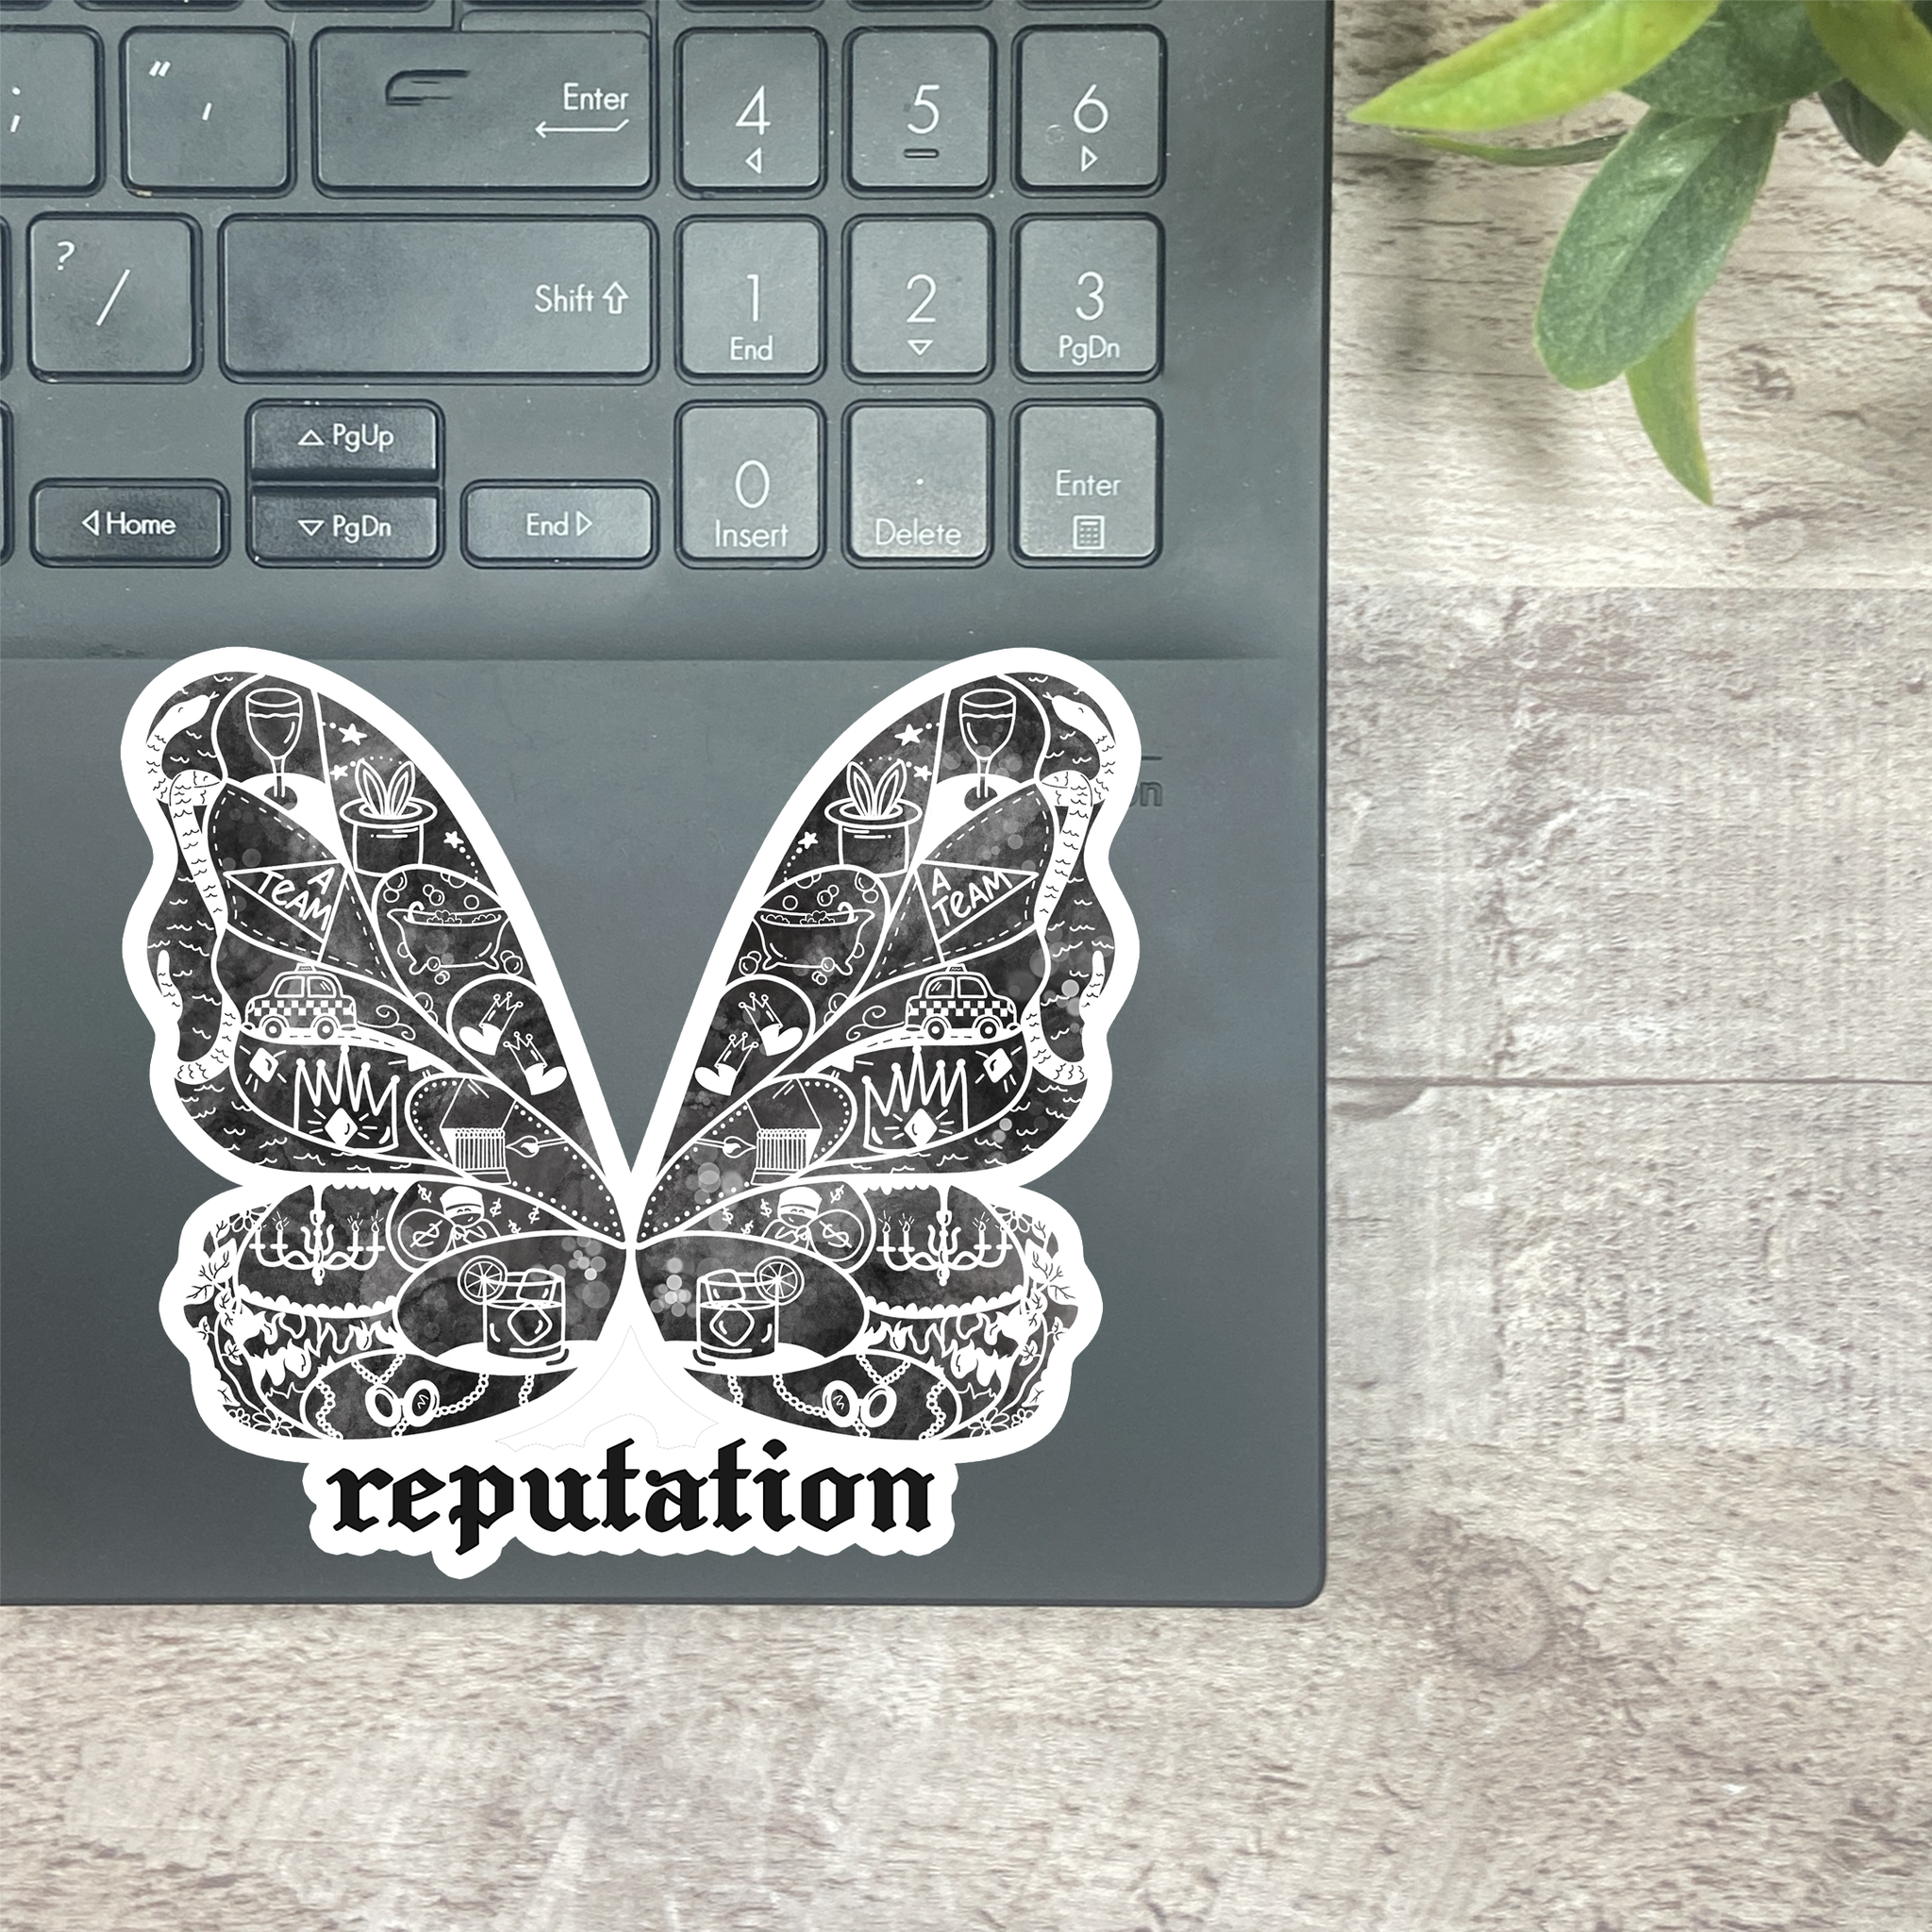 Reputation Era Butterfly Vinyl Sticker, Bookmark, and Notecard Options MB142